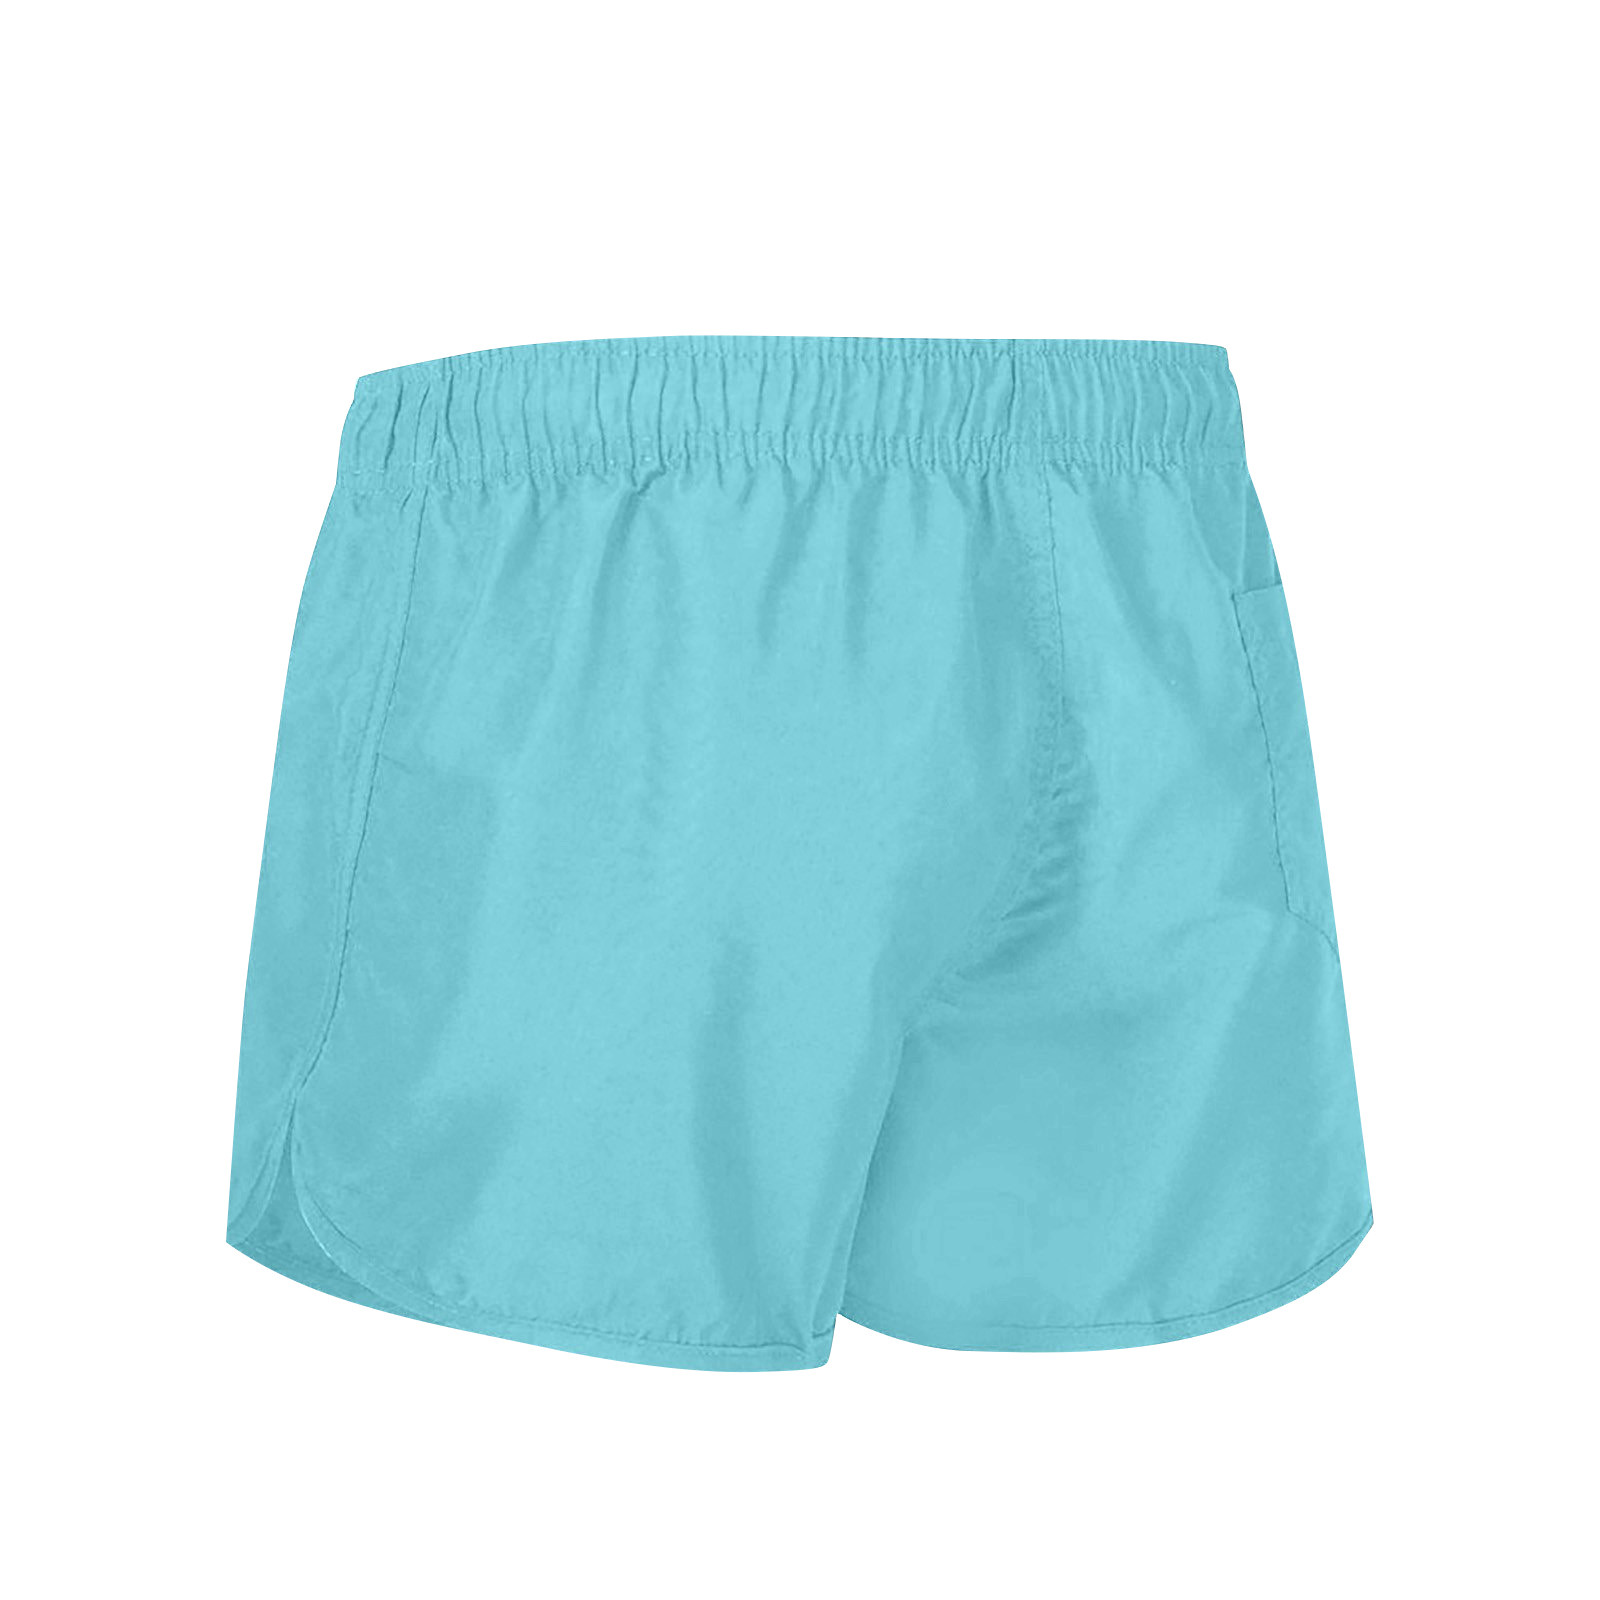 HaHaHappy Men's Cargo Shorts Elastic Waist Casual Cotton Shorts with ...